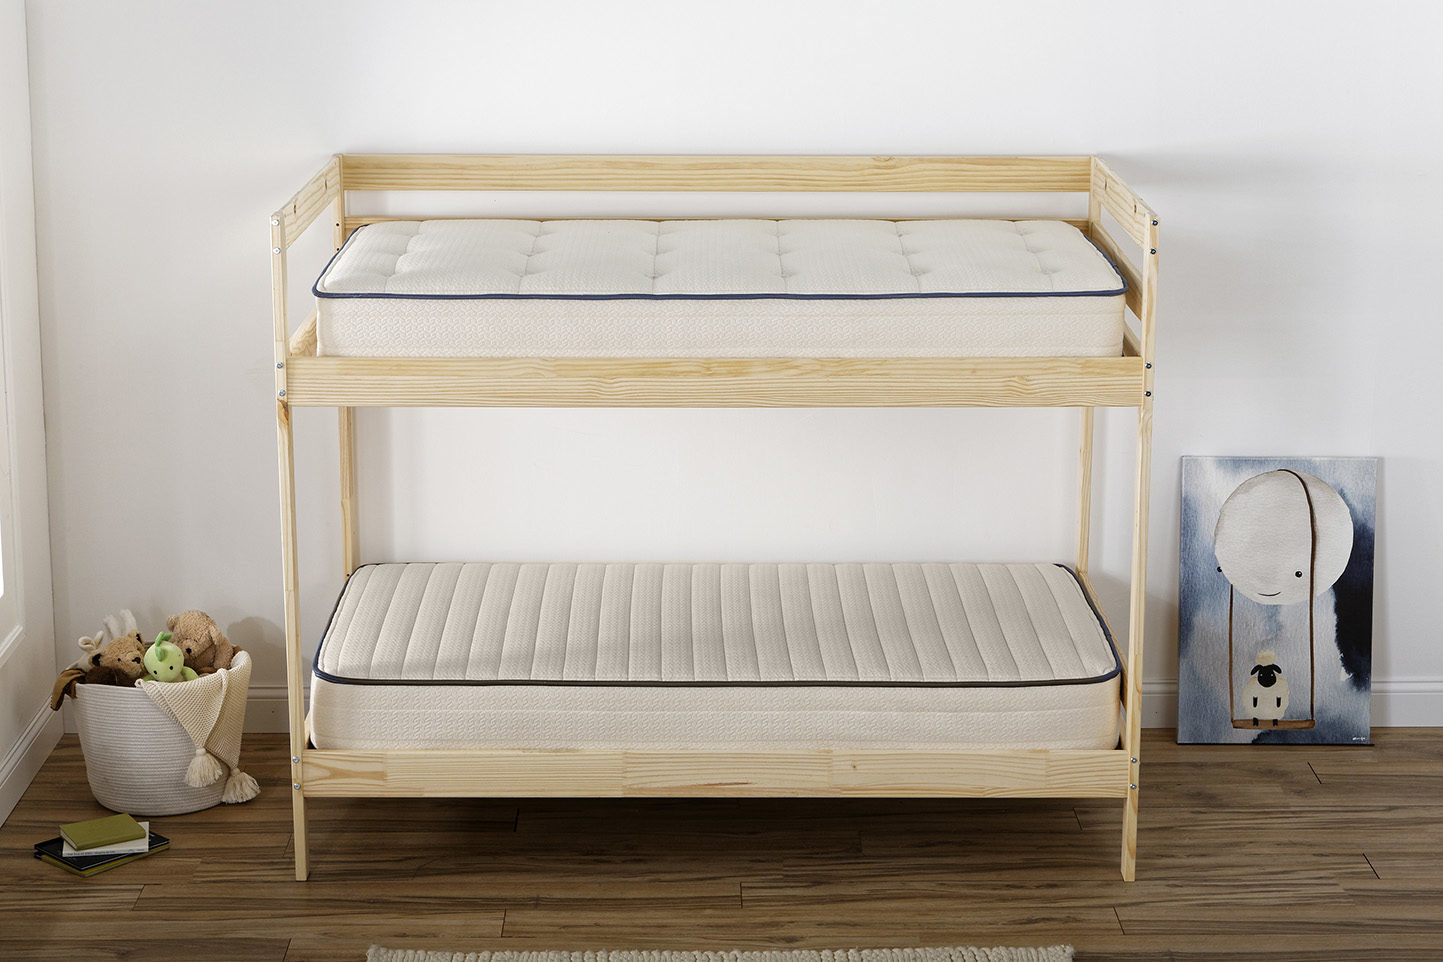 Kiwi Bunk Bed Mattresses, Can I Use A Regular Mattress On Bunk Beds